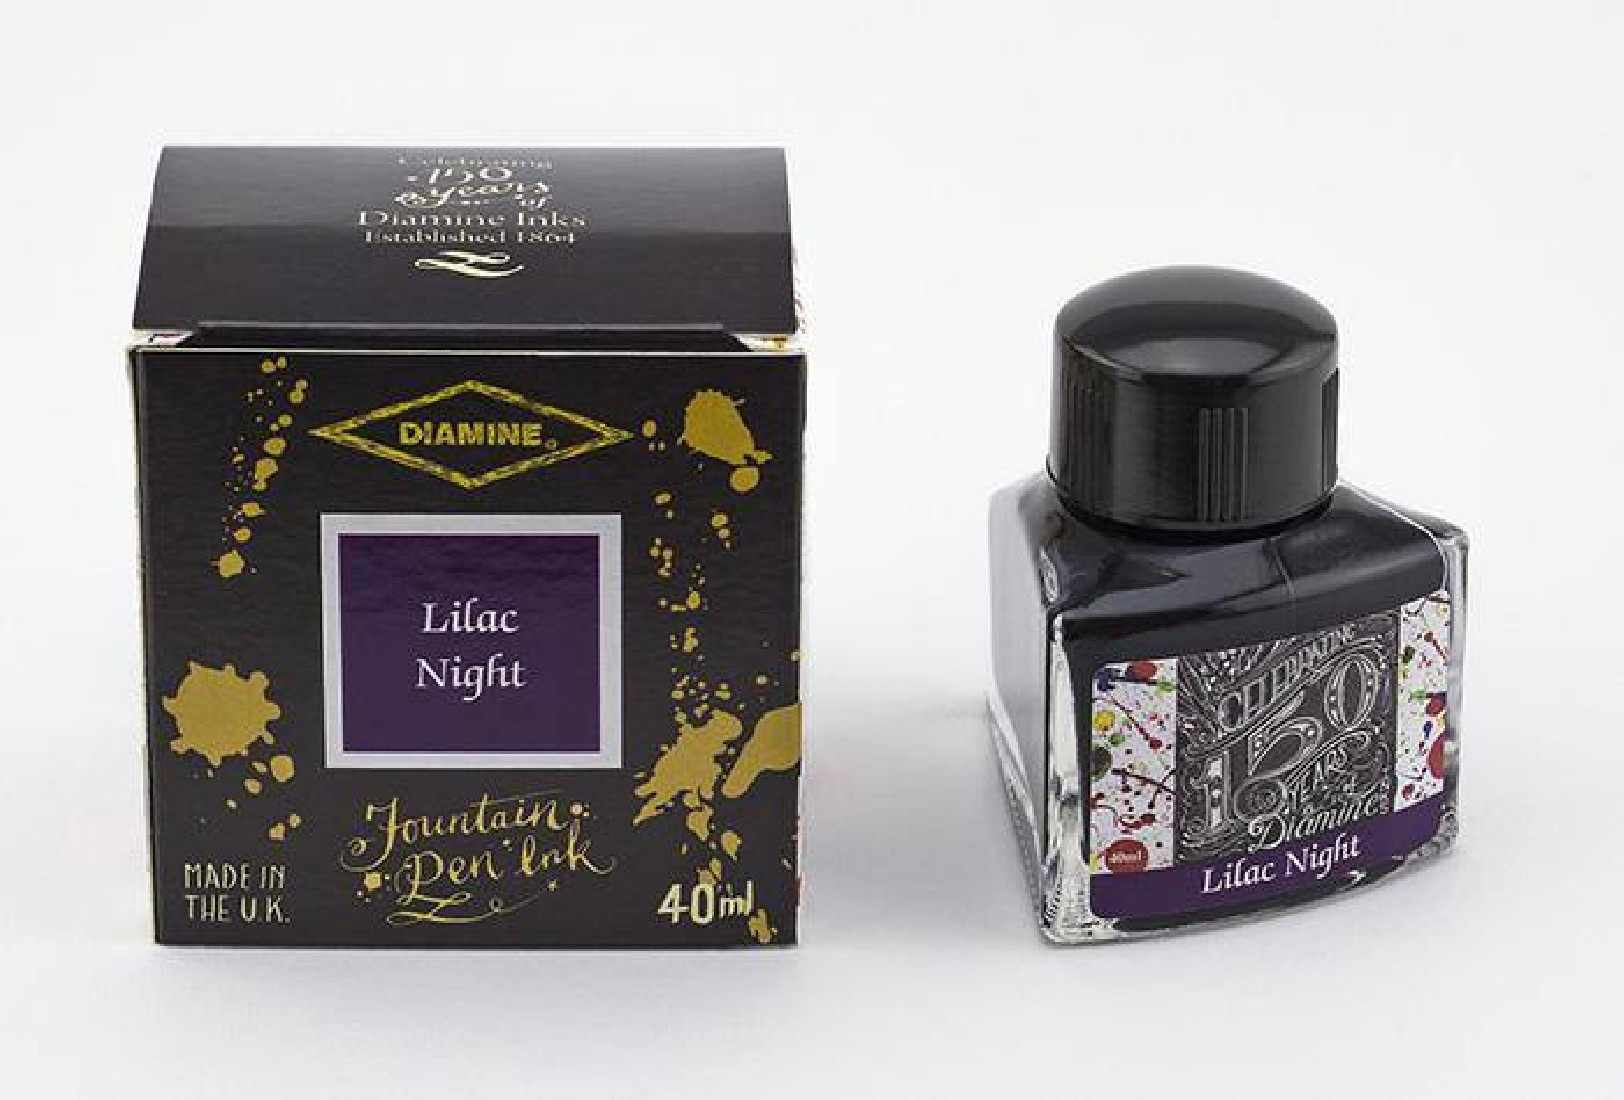 Diamine 40ml Lilac Night 1111 150 years anniversary Fountain pen ink